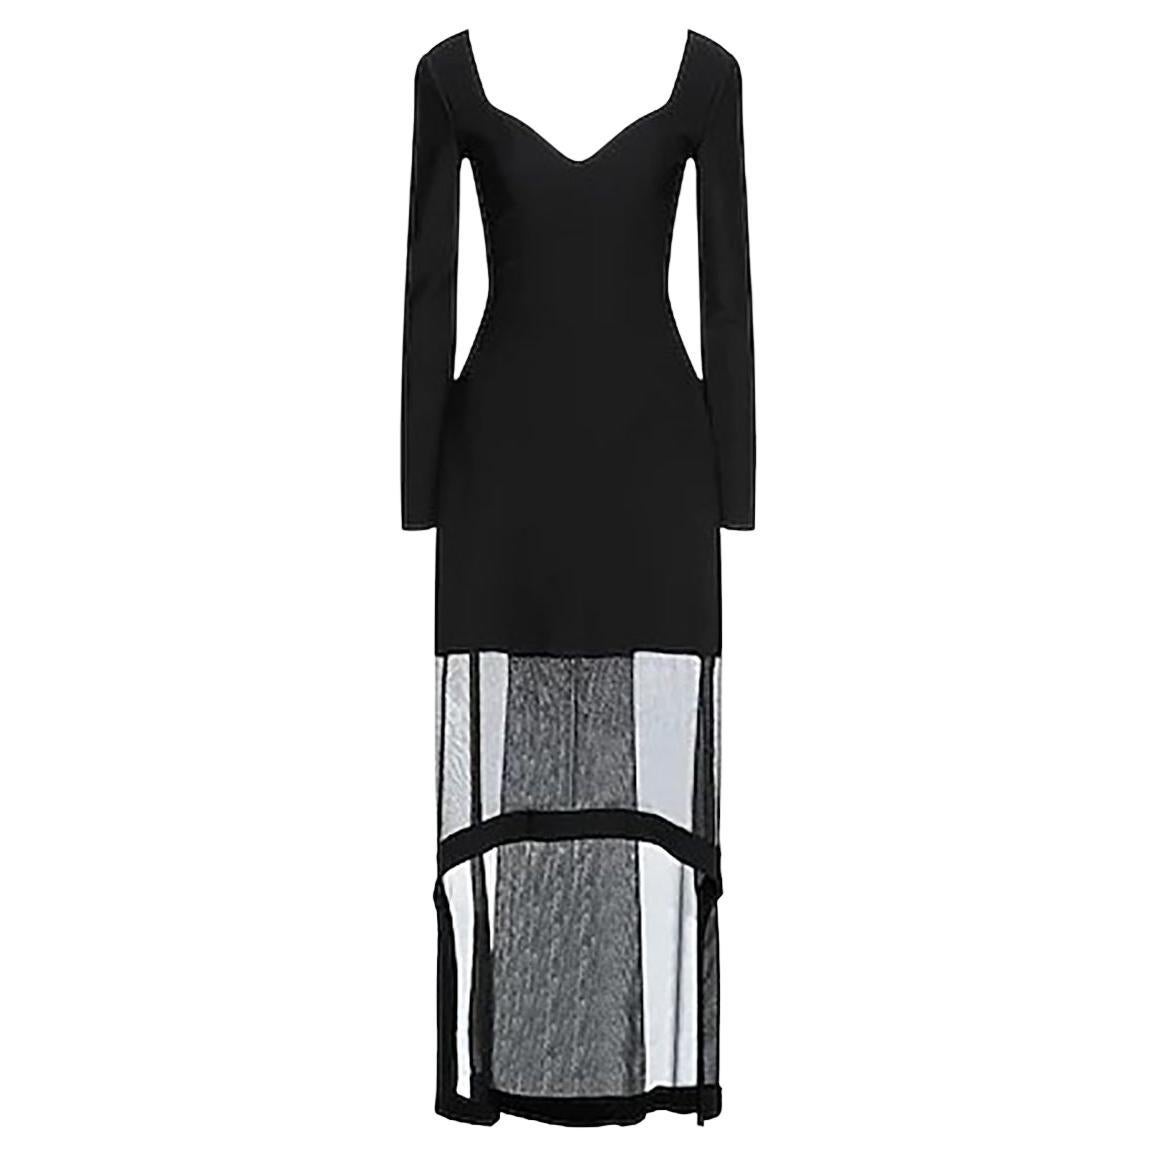 NEW ALEXANDER MCQUEEN BLACK VISCOSE MESH PANEL DRESS Size S, M, L